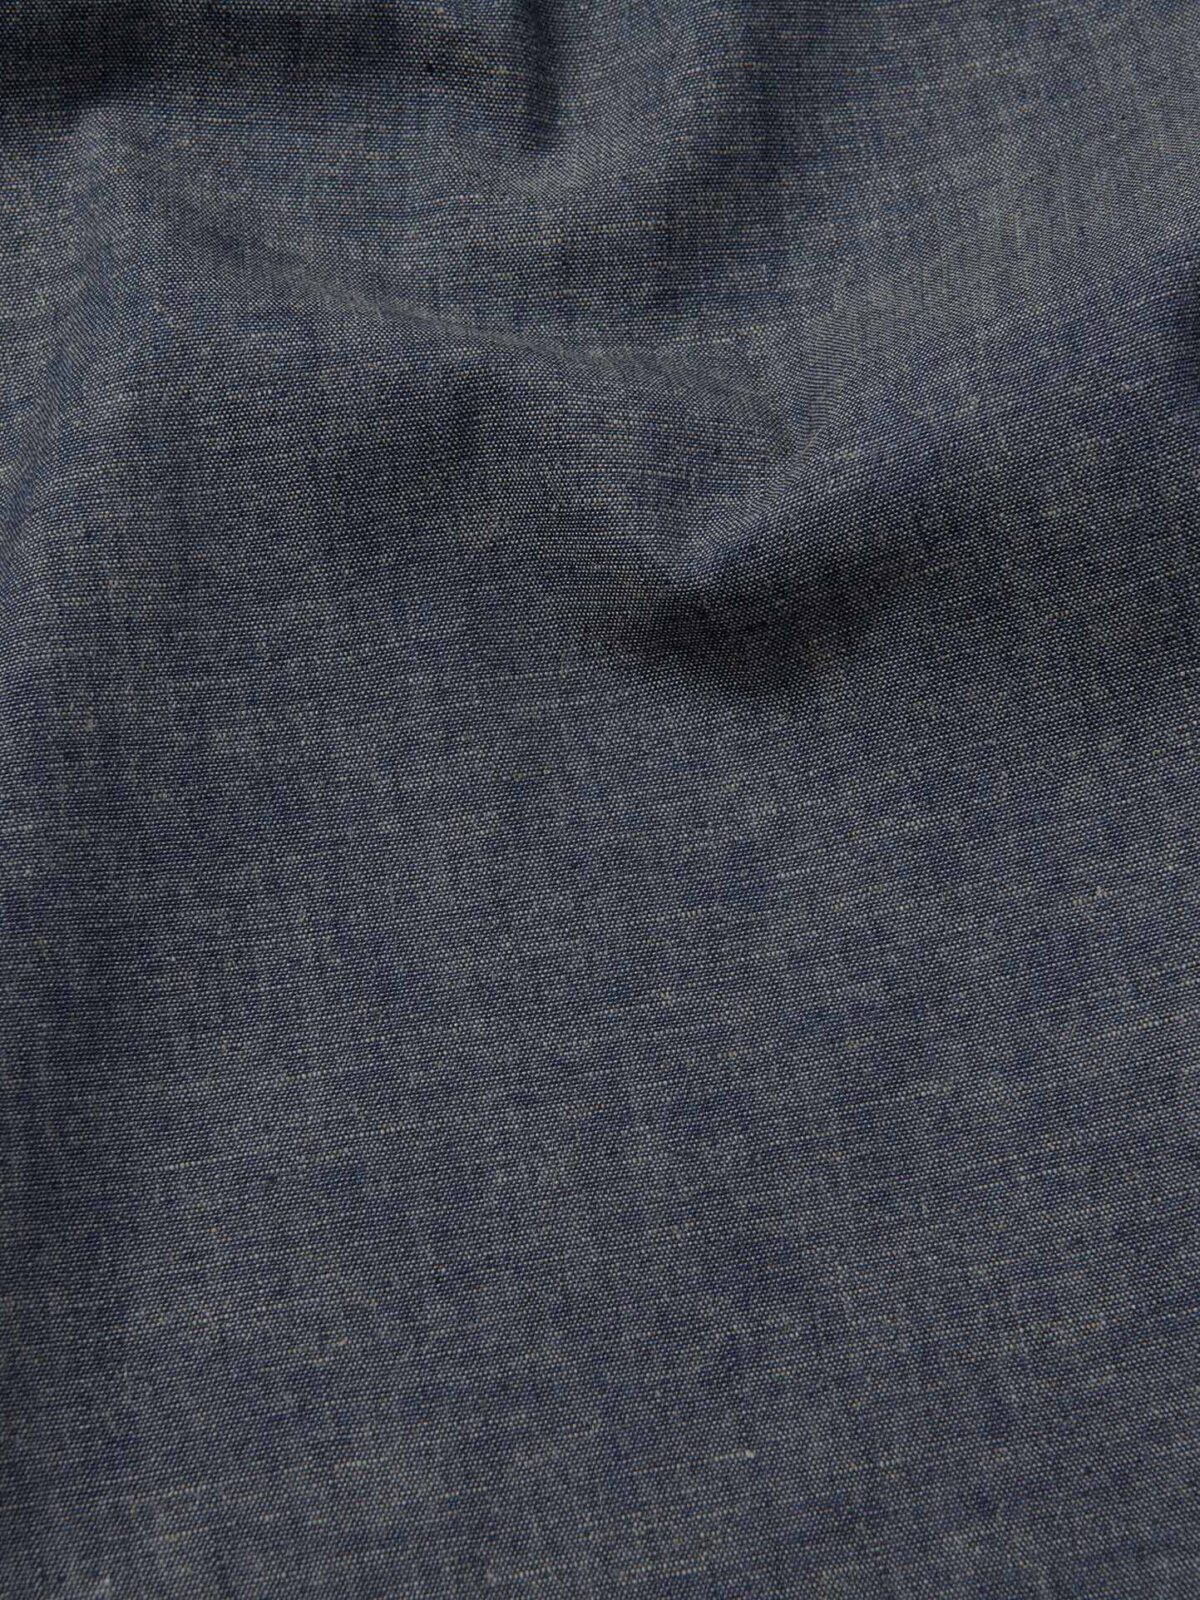 Grey color jeans denim fabric, grey denim fabric close up photography, denim  jeans cloth, denim texture, indigo 25674016 Stock Photo at Vecteezy